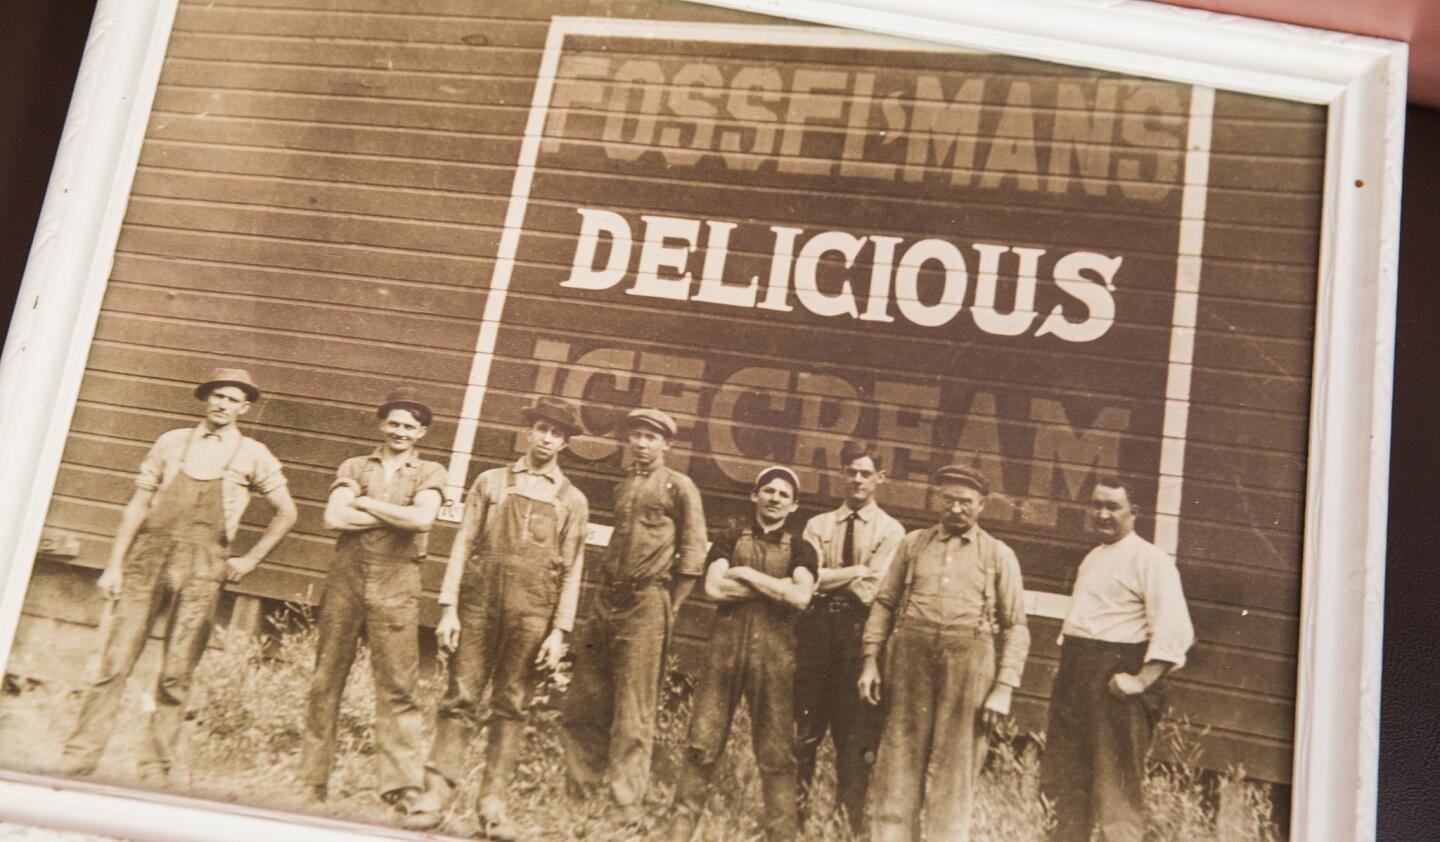 A vintage photograph at Fosselman's Ice Cream shop.